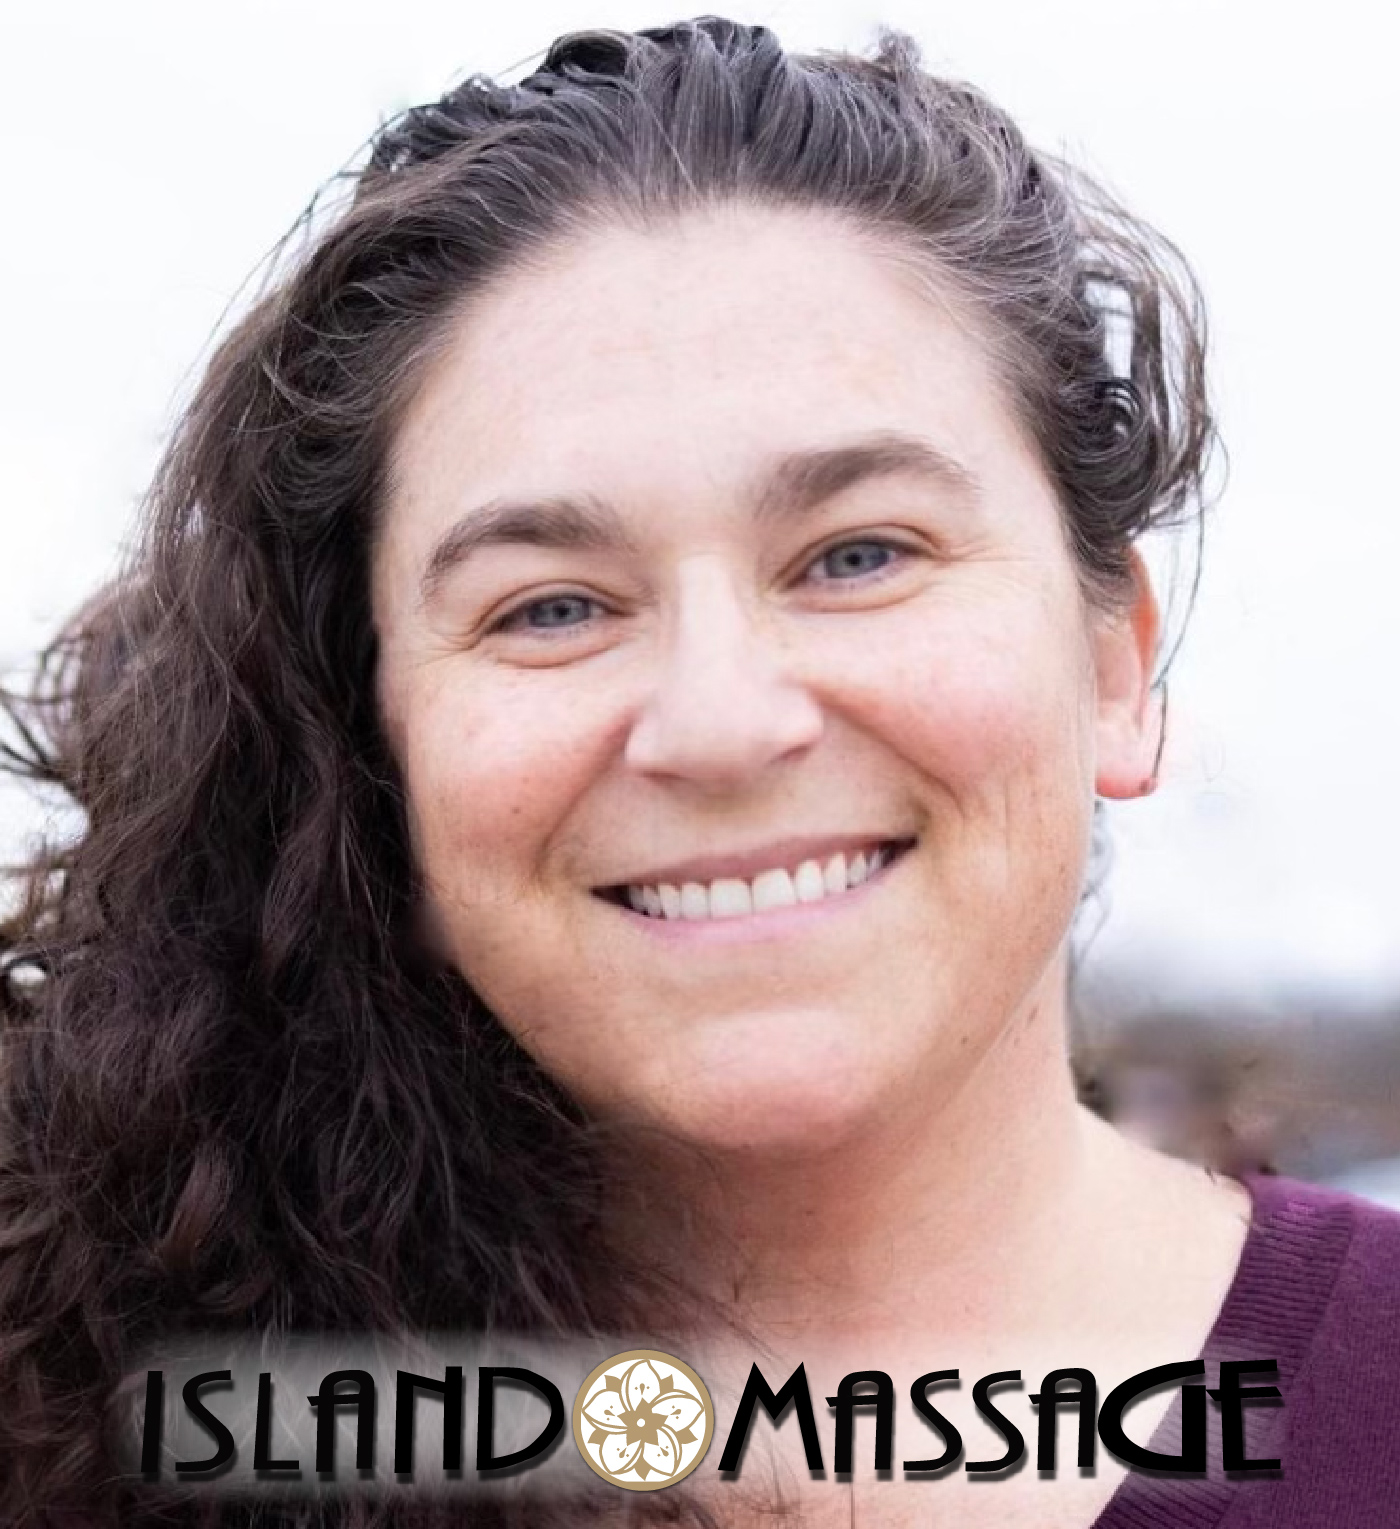 Island Massage Staff / www.islandmassagespa.com